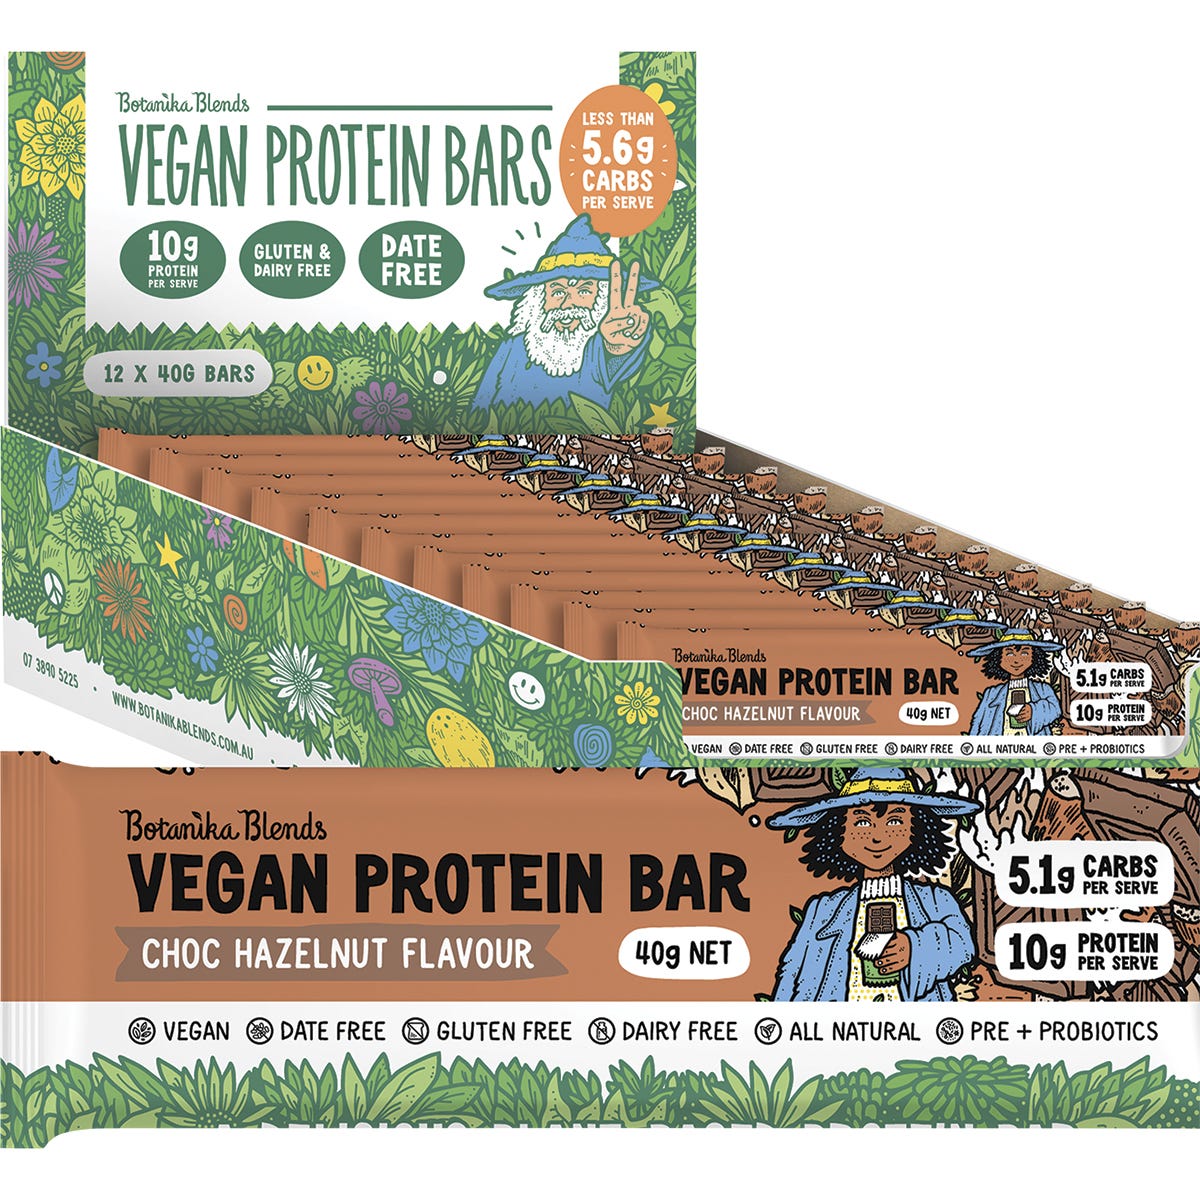 Botanika Blends Vegan Protein Bars Choc Hazelnut 40g - Dr Earth - Snack Bars, Nutrition